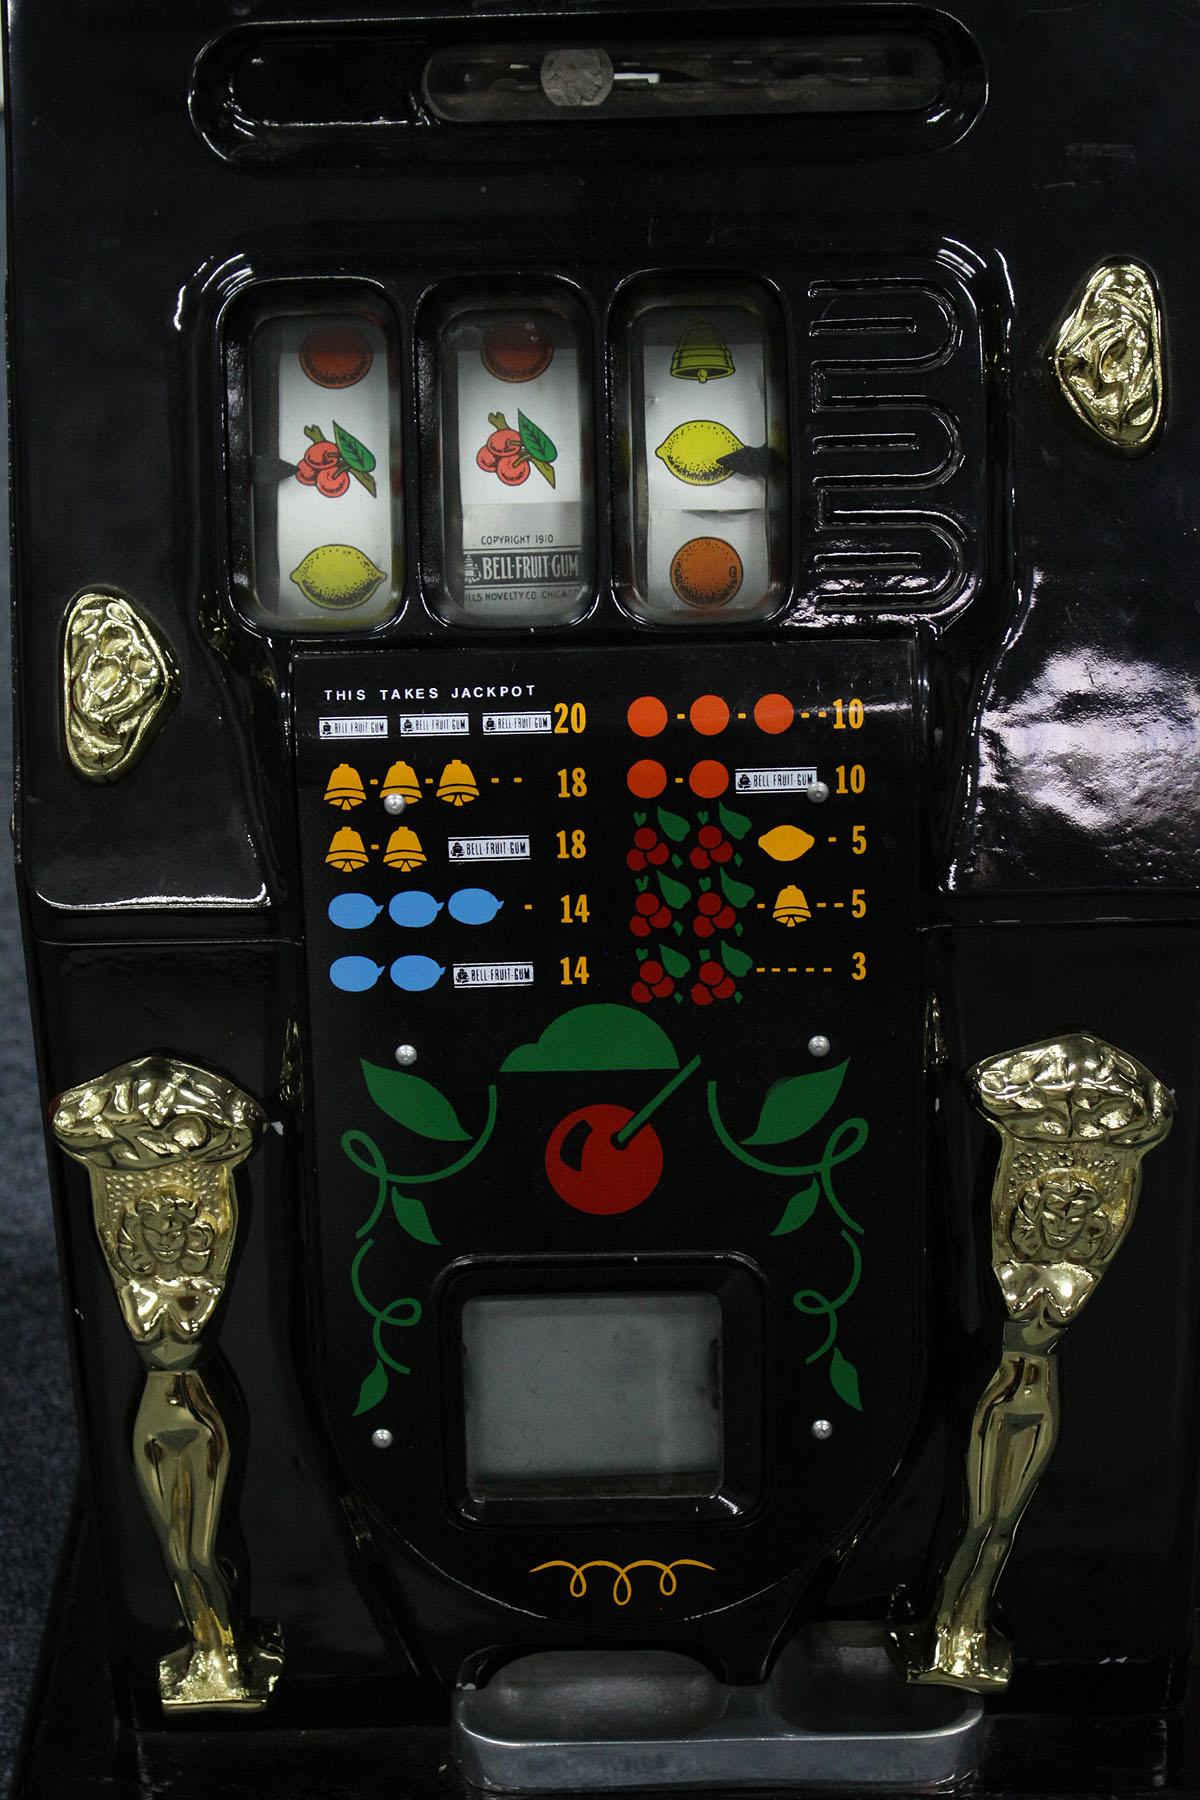 Vintage Nickel Slot Machine